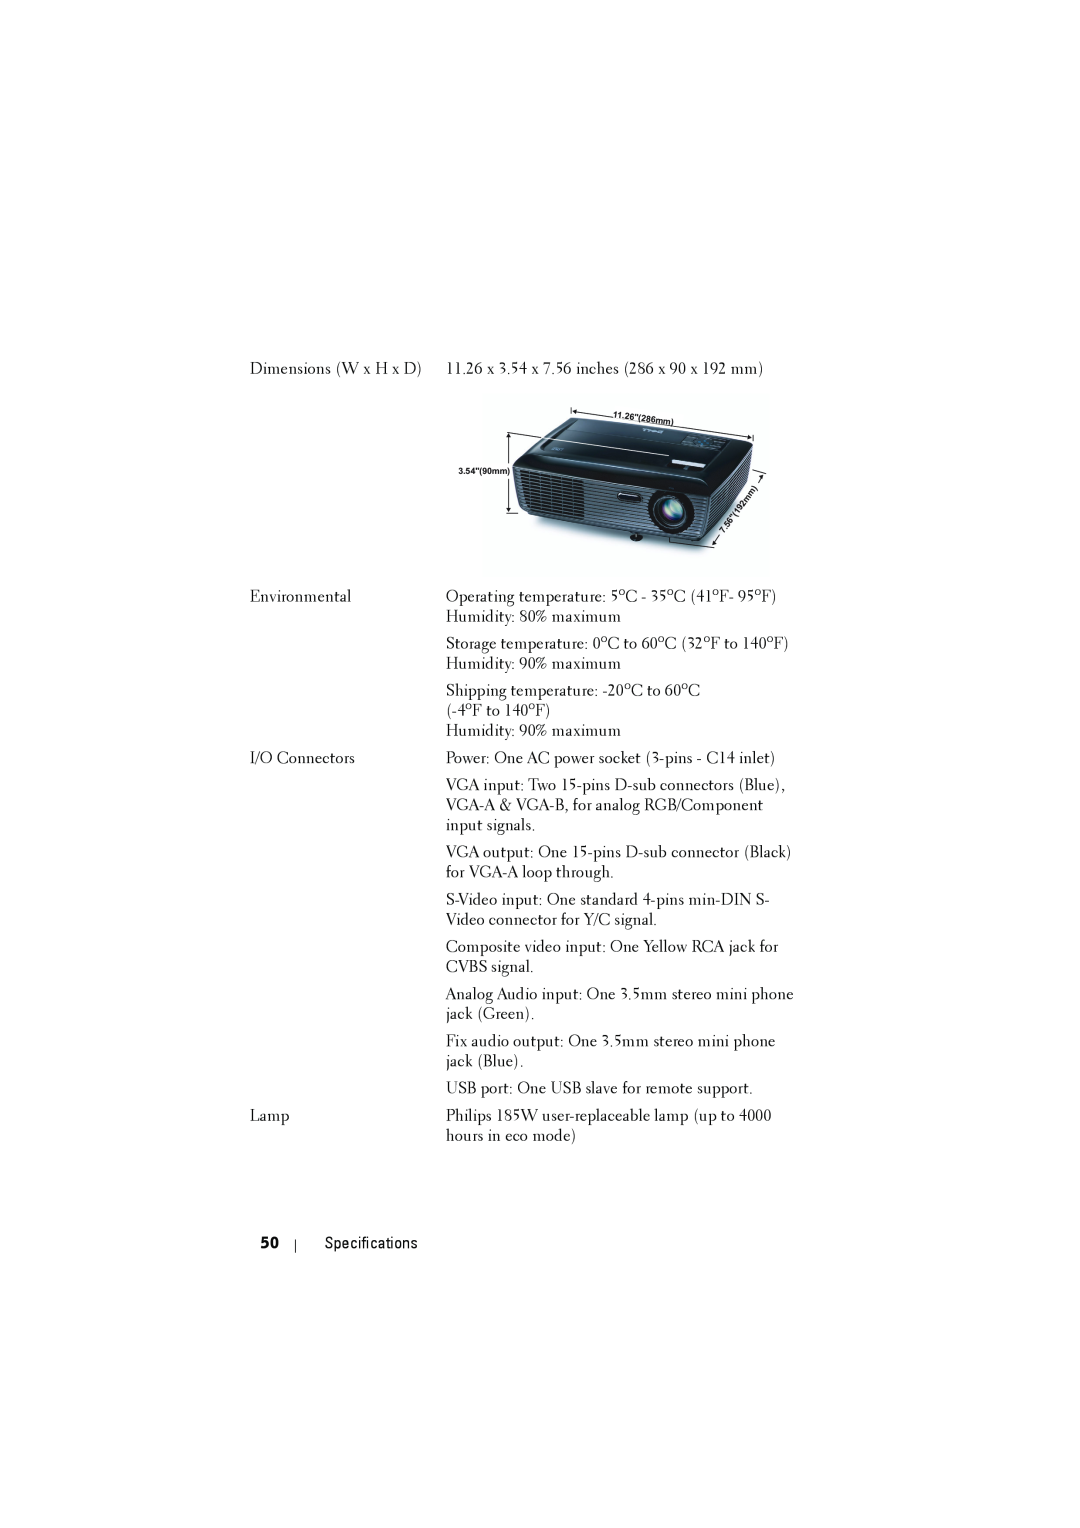 Dell 1210S manual 26286mm, 3.5490mm 